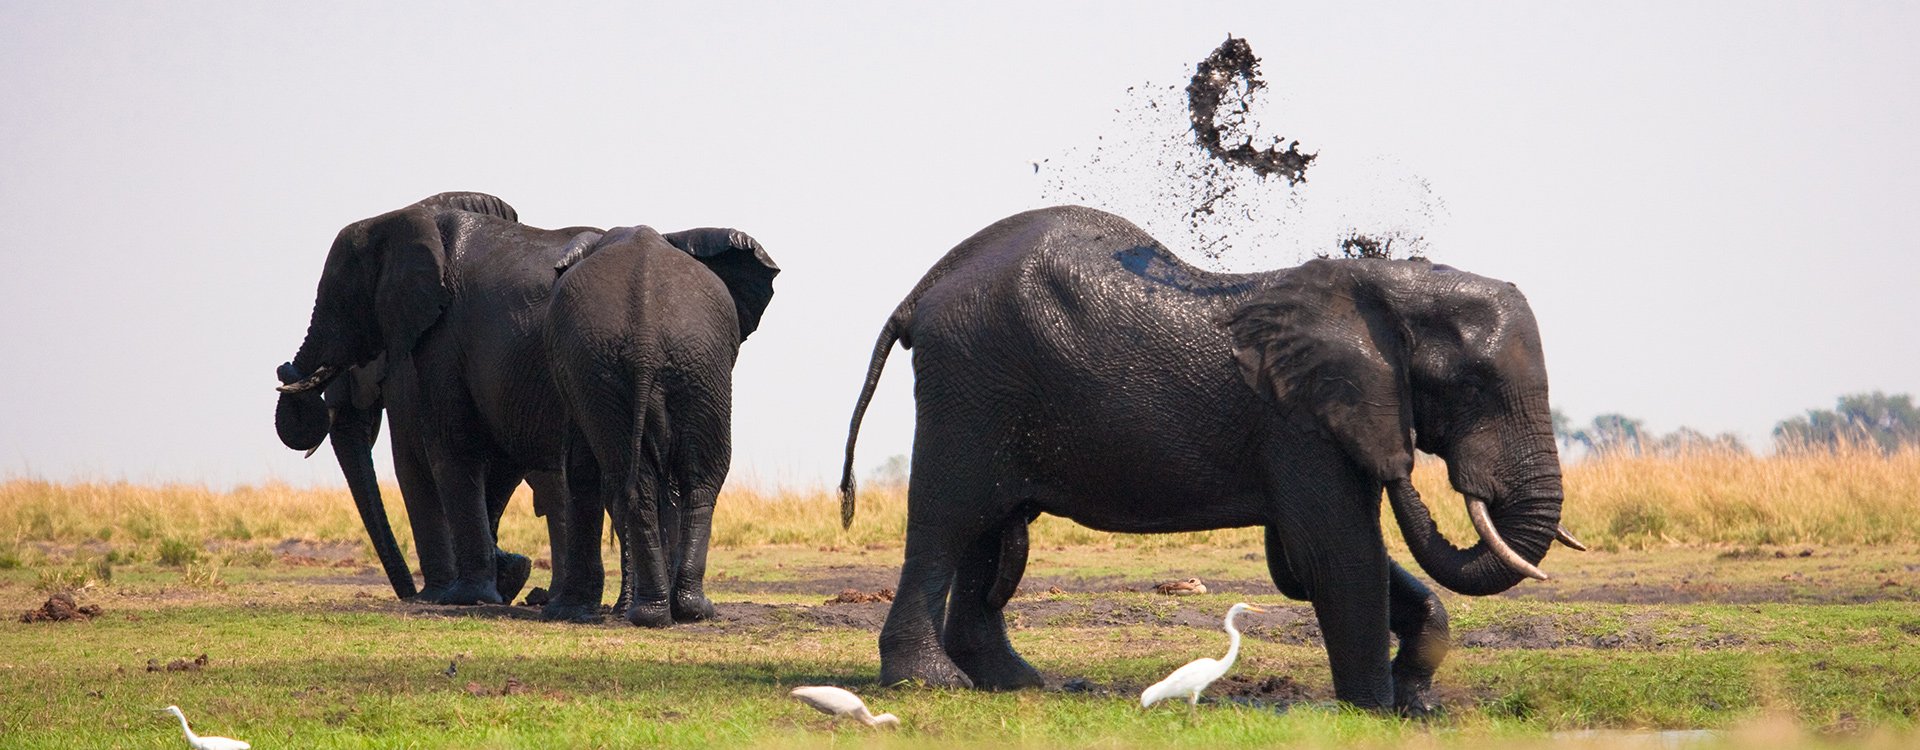 Chobe National Park_Elephants